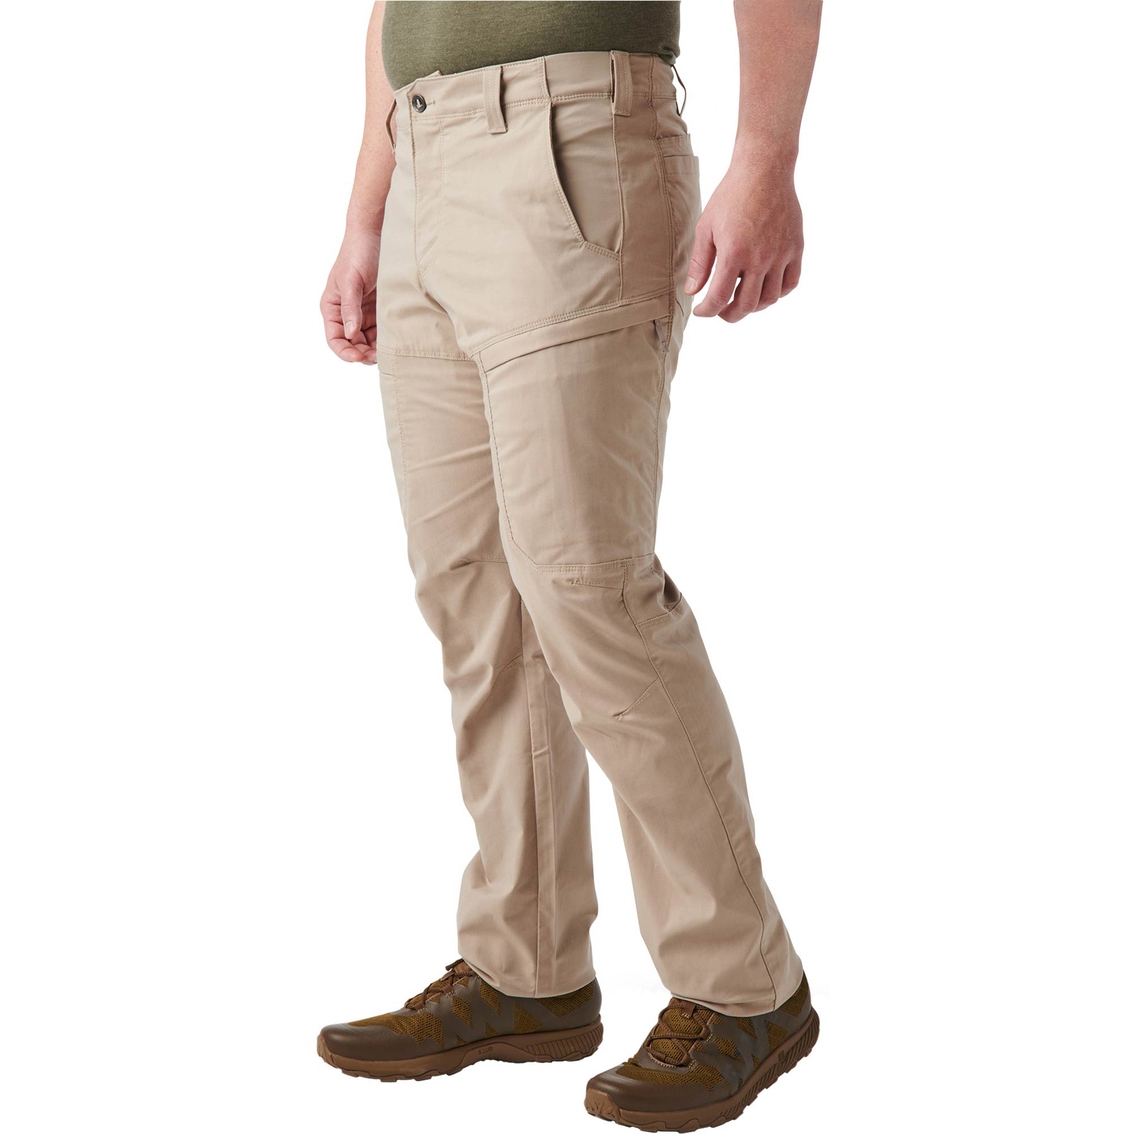 5.11 Tactical Ridge Pants - Image 3 of 8